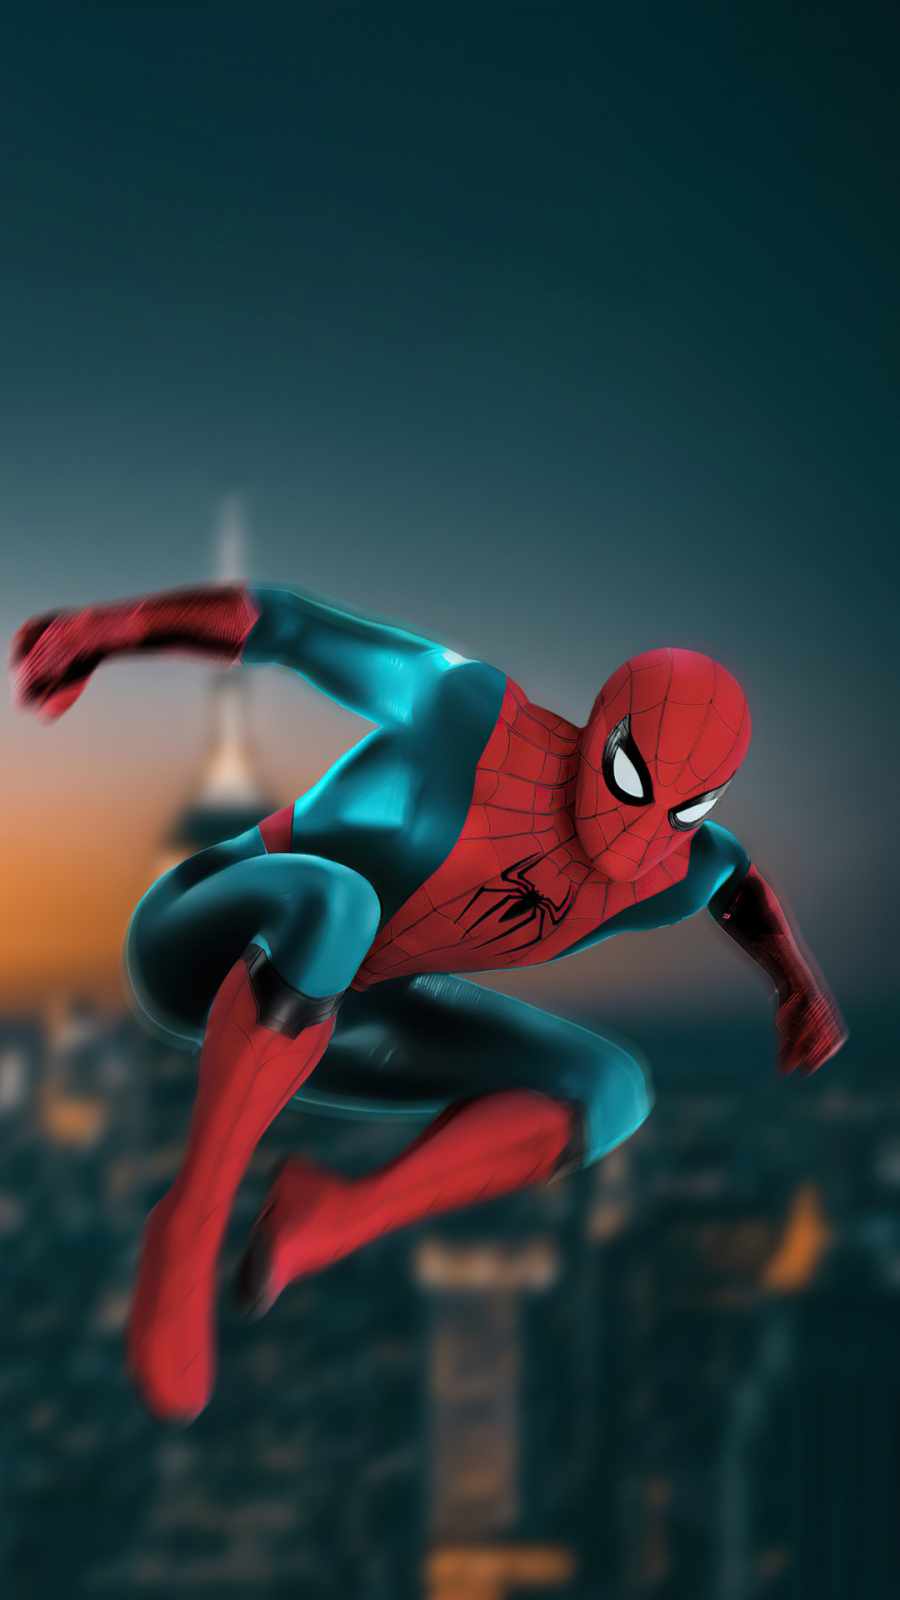 Spiderman New Suit IPhone Wallpaper - IPhone Wallpapers : iPhone Wallpapers